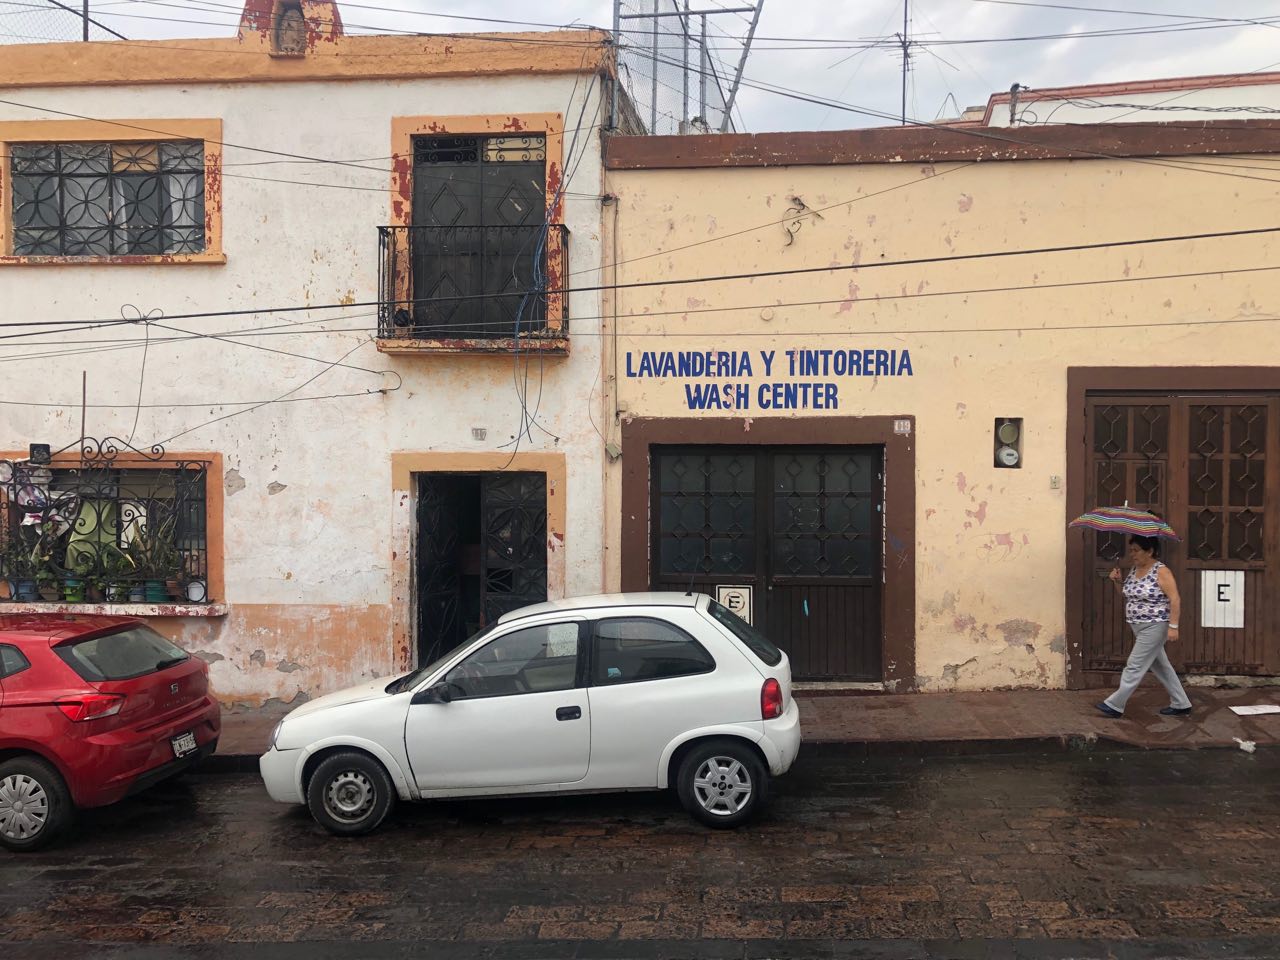  ¡Por fin! Tras varias semanas de intenso calor, llueve en el municipio de Querétaro